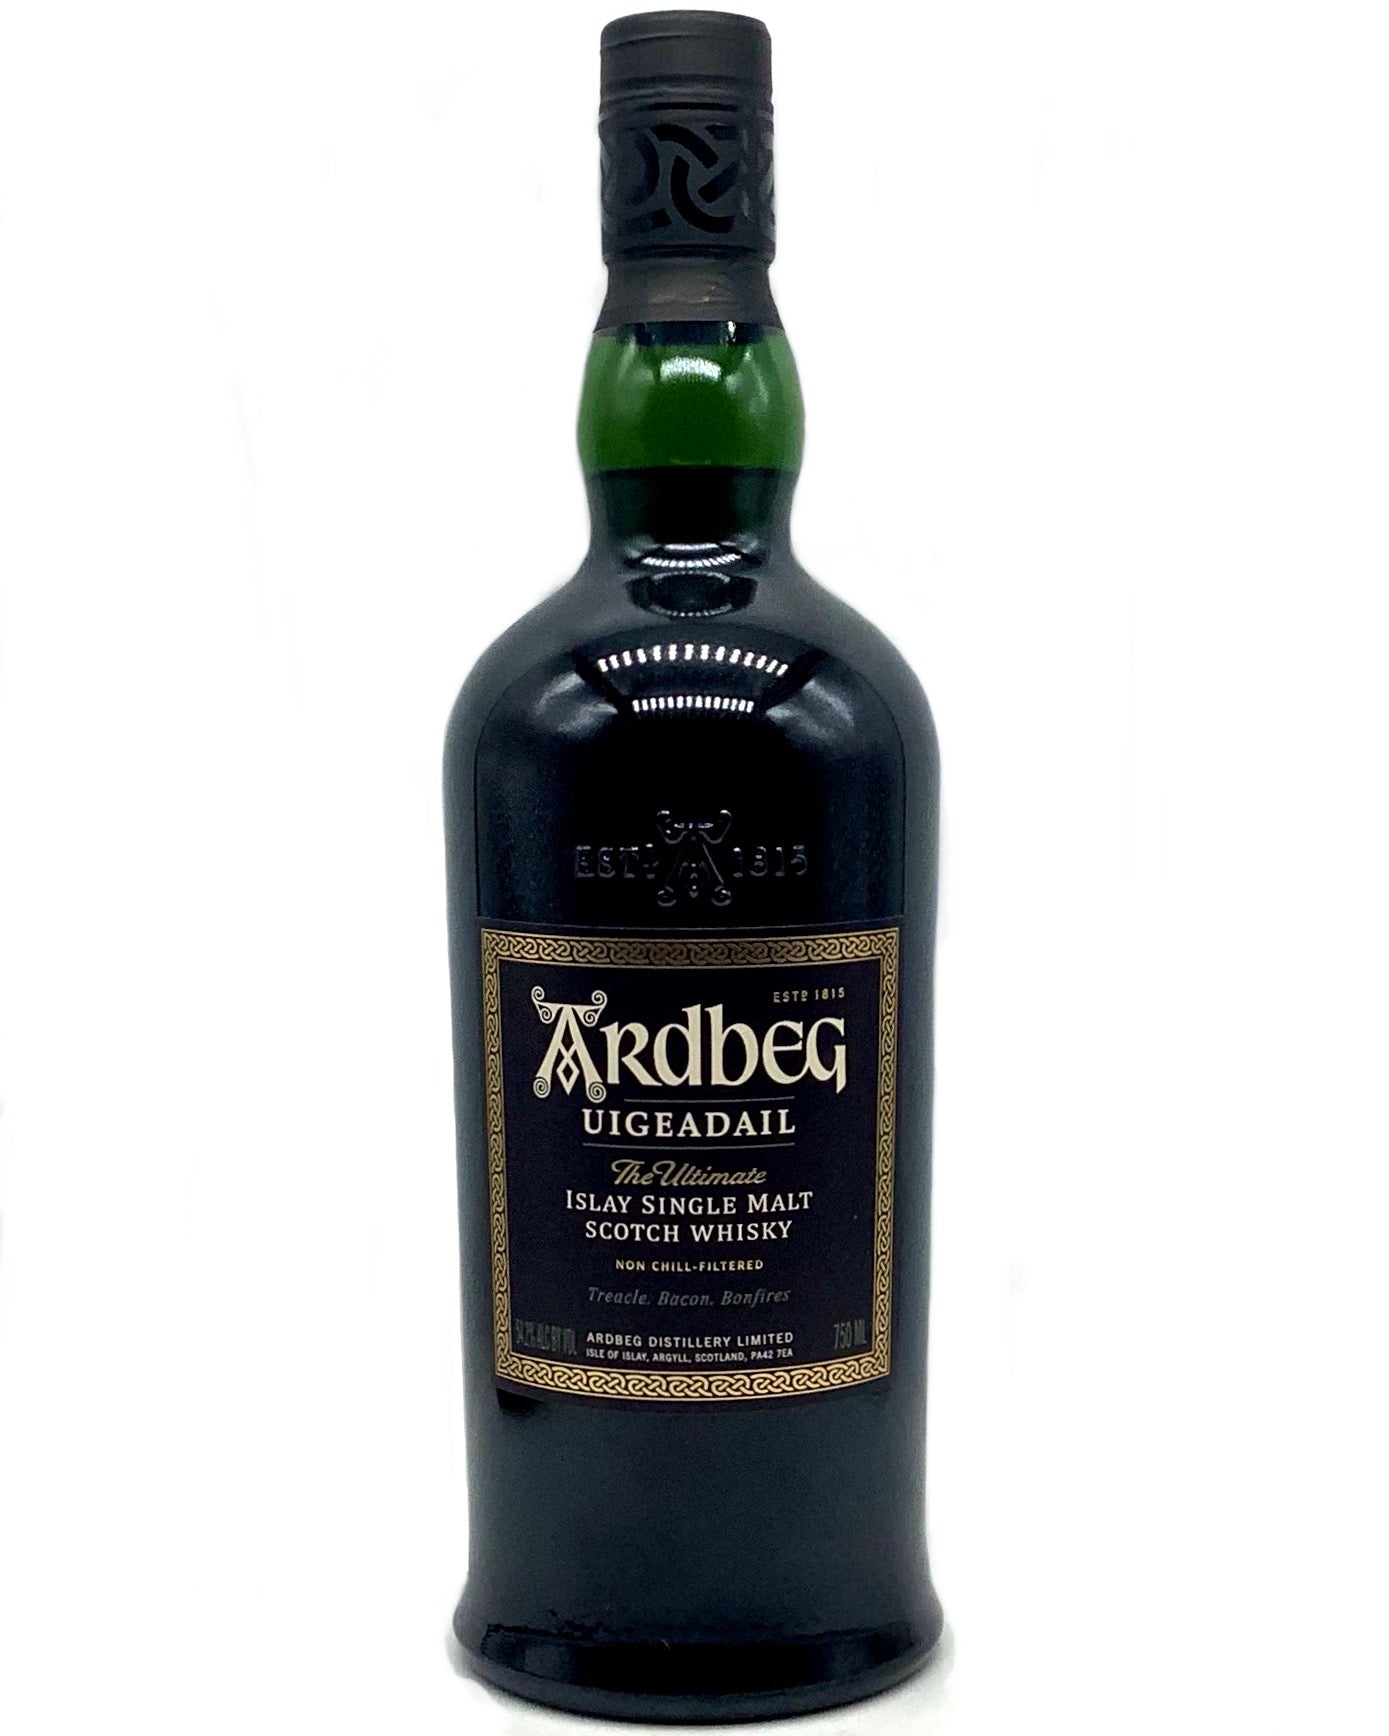 Ardbeg "Uigeadail" Islay Single Malt Scotch Whisky 750ml